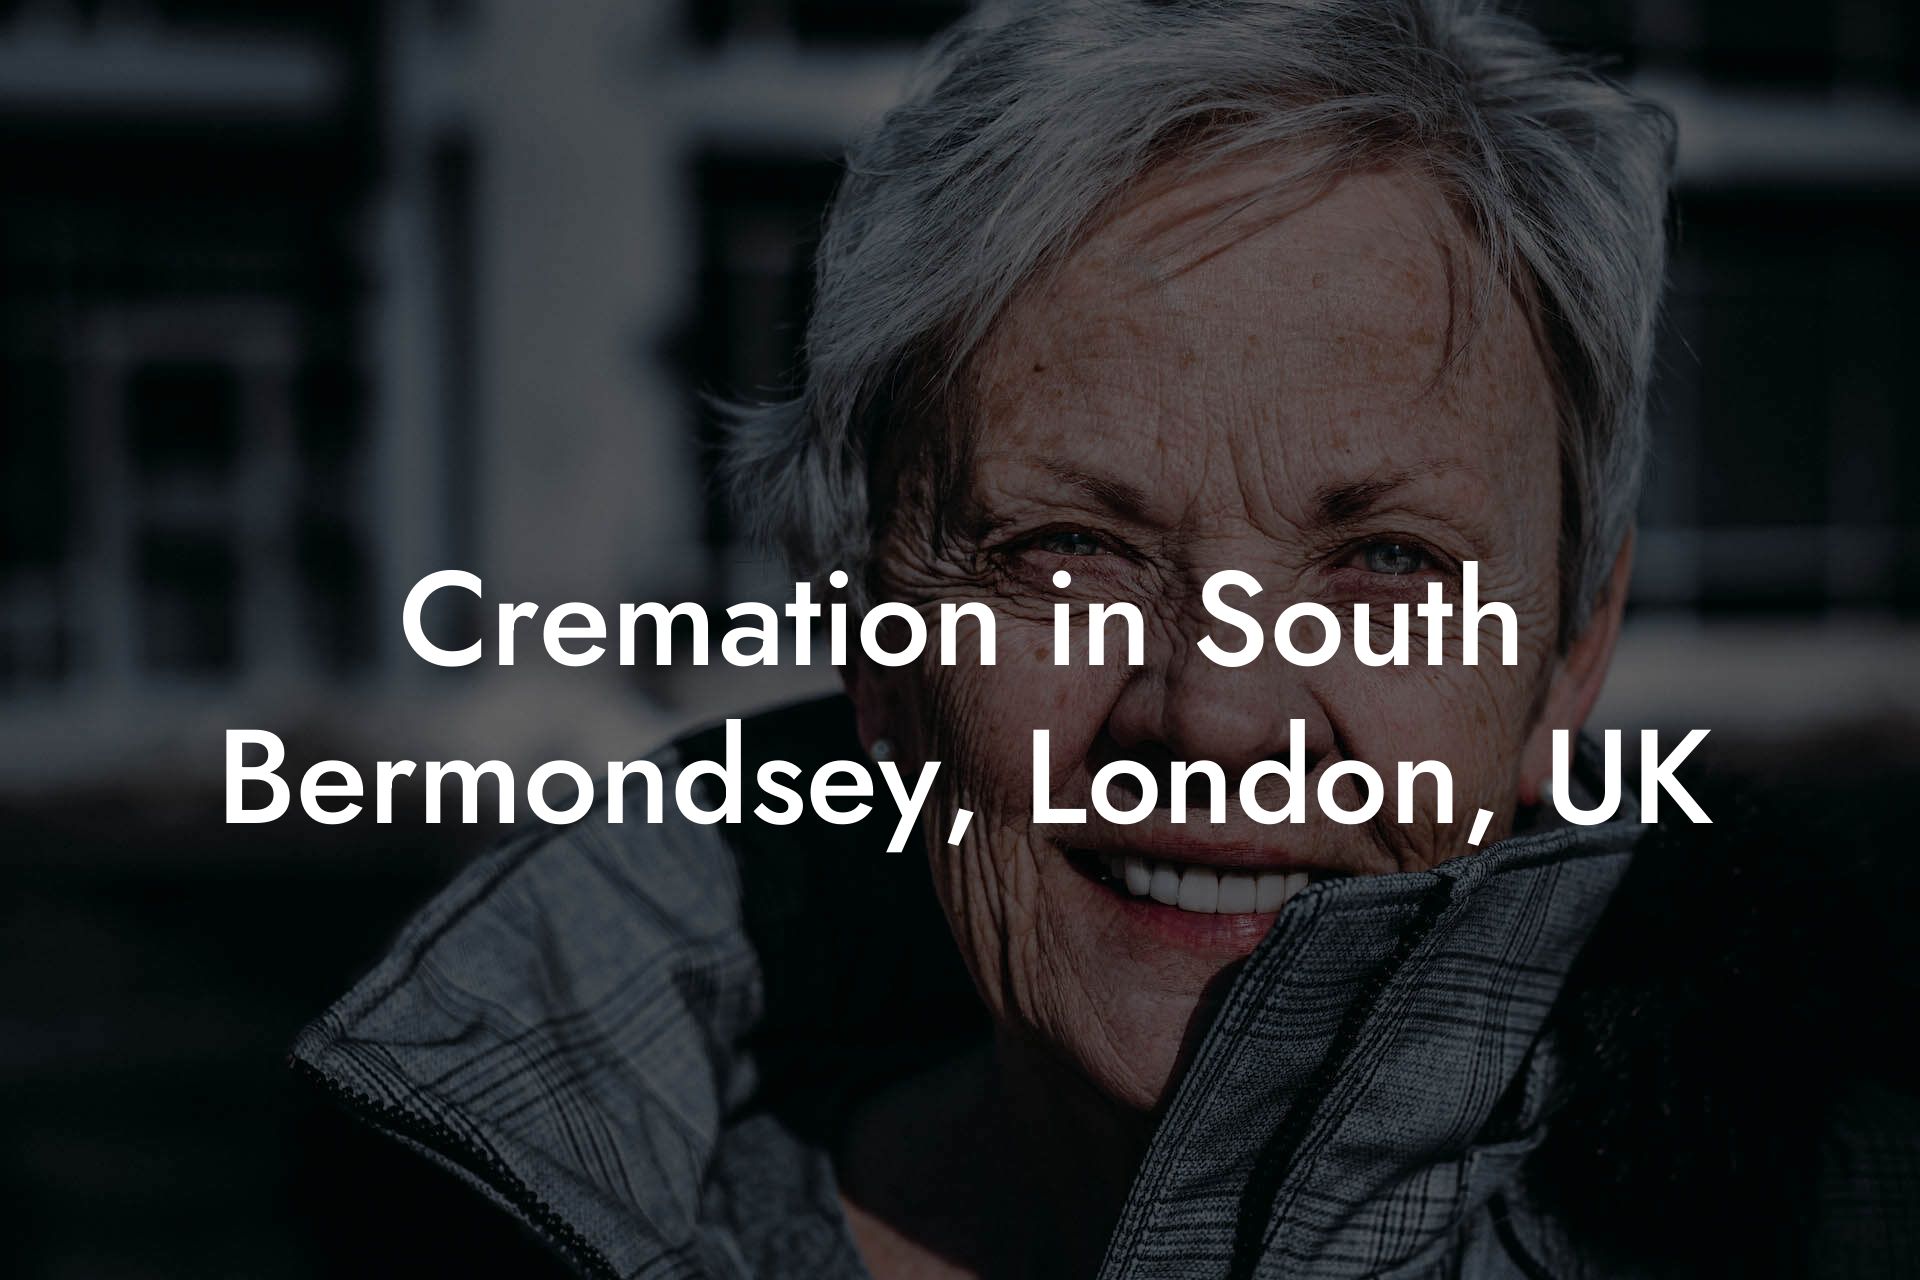 Cremation in South Bermondsey, London, UK